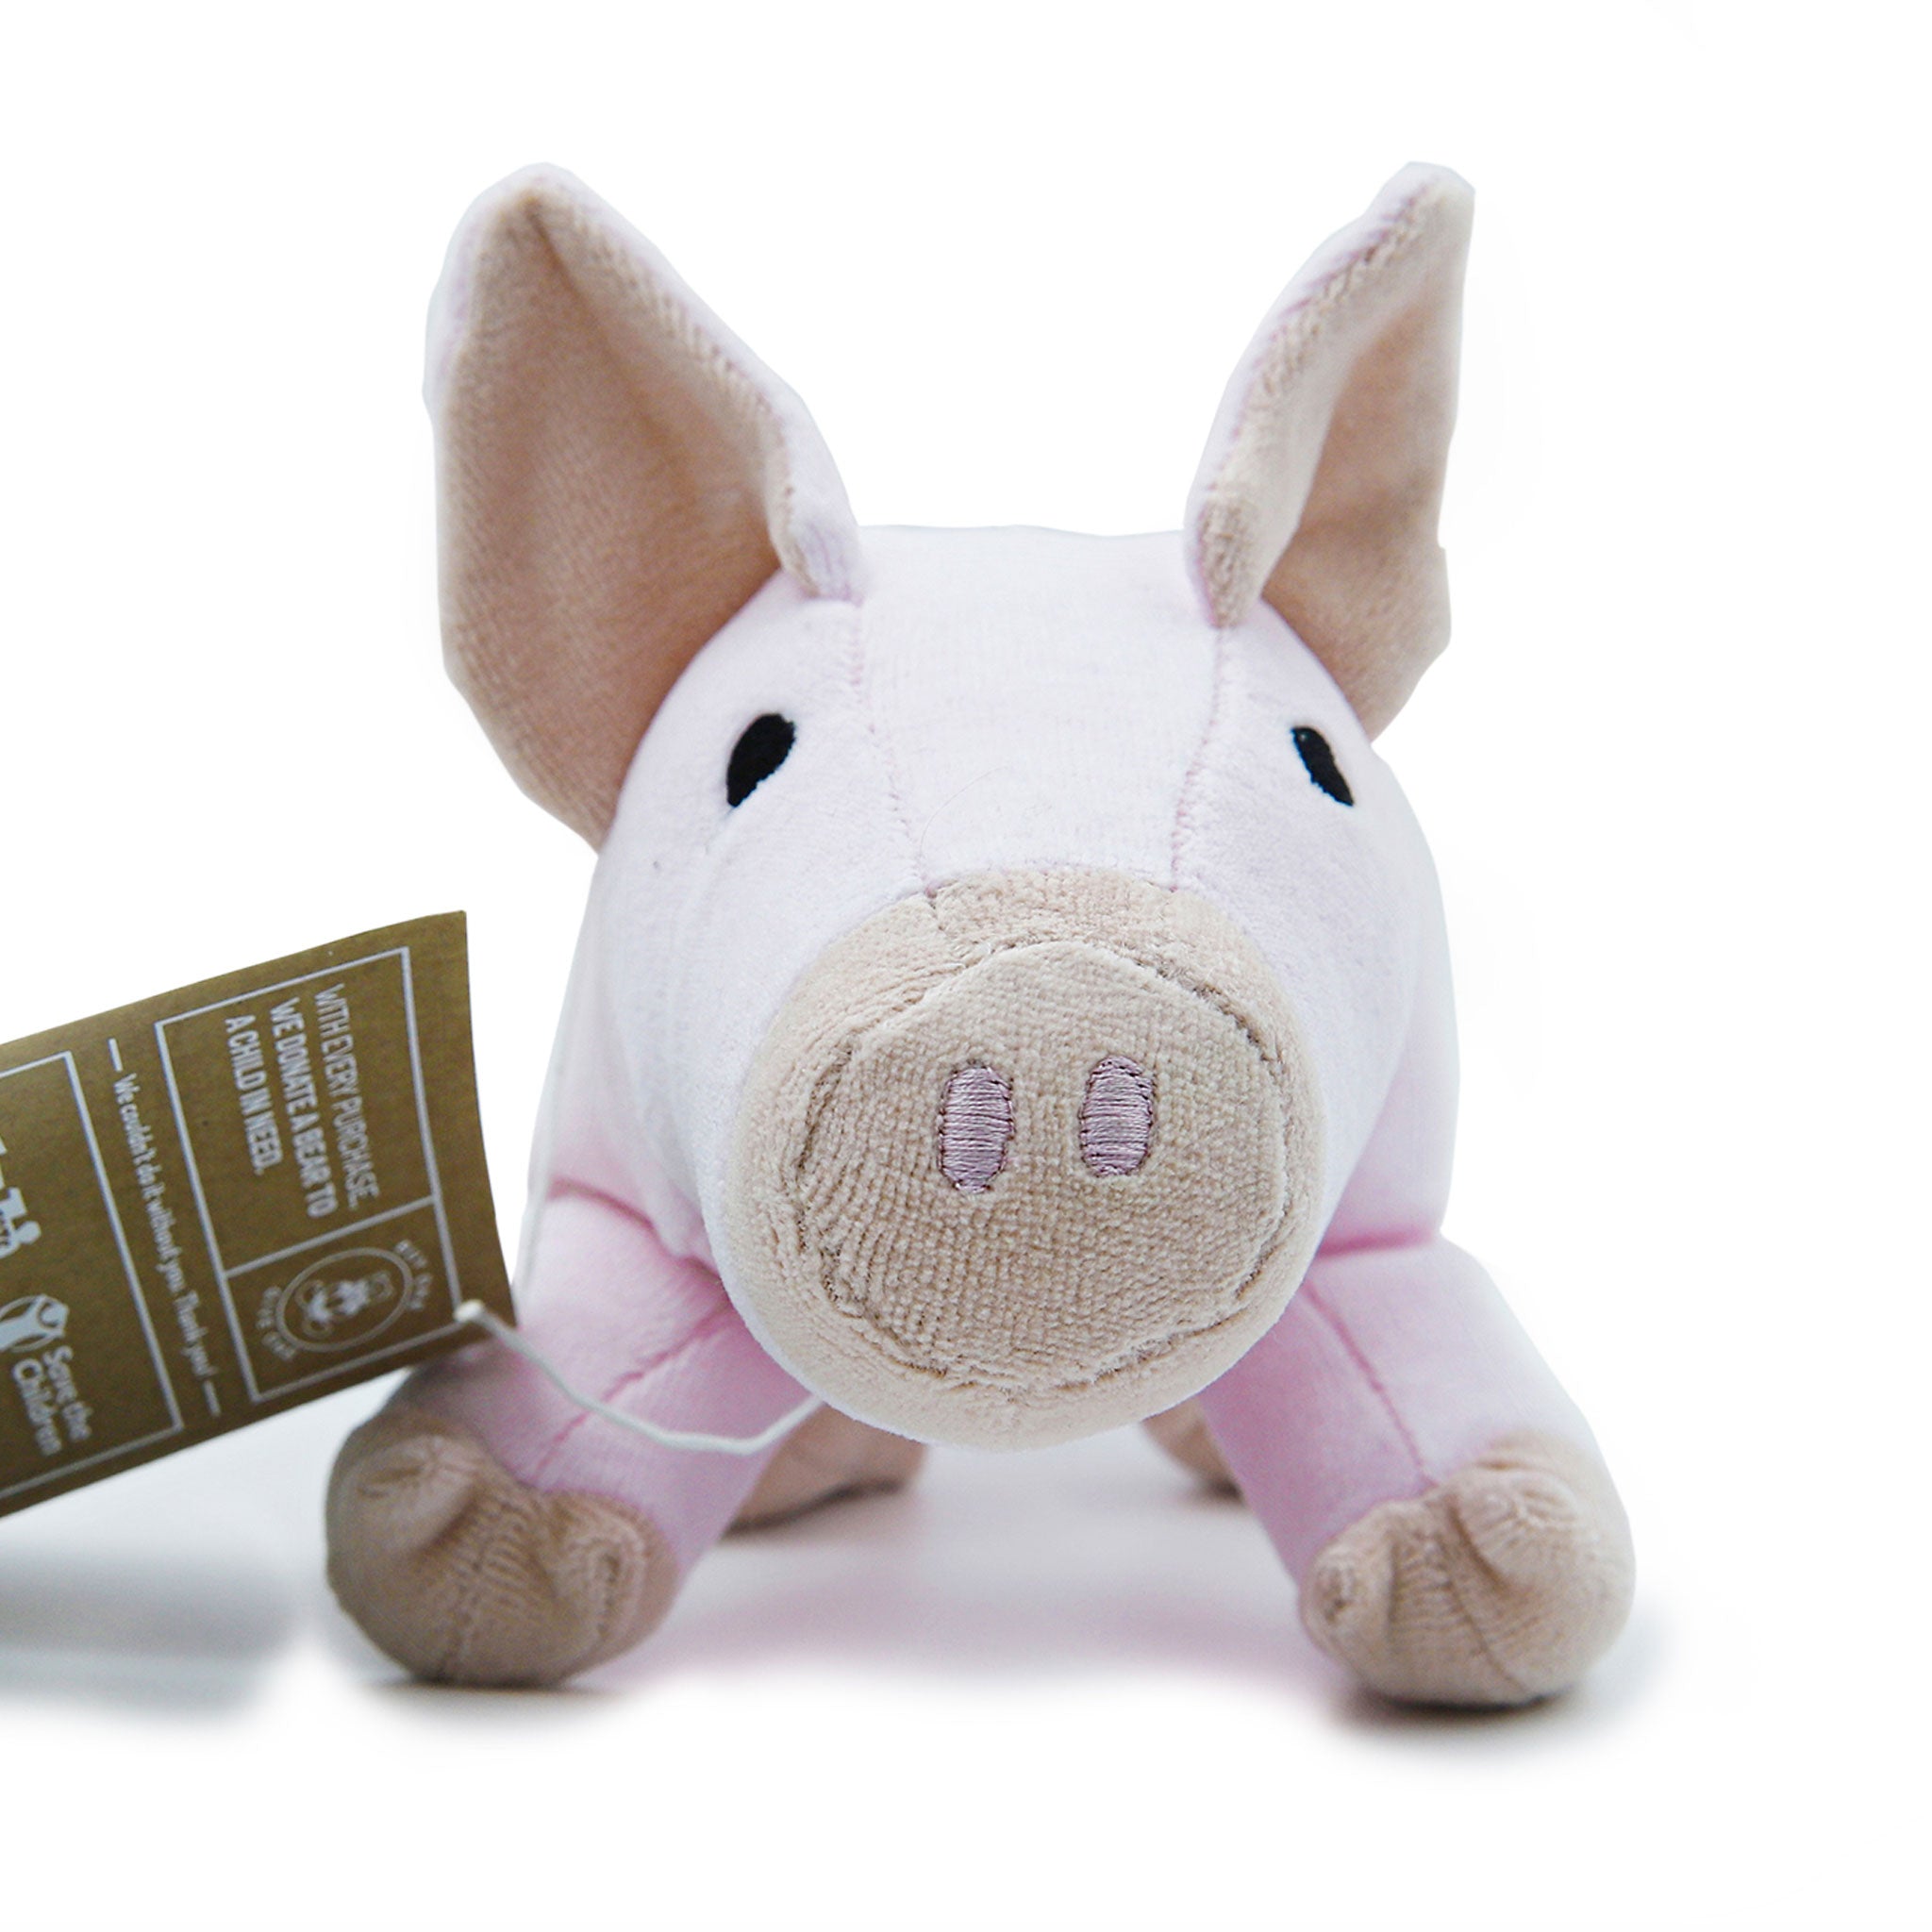 Plush Pig Toy